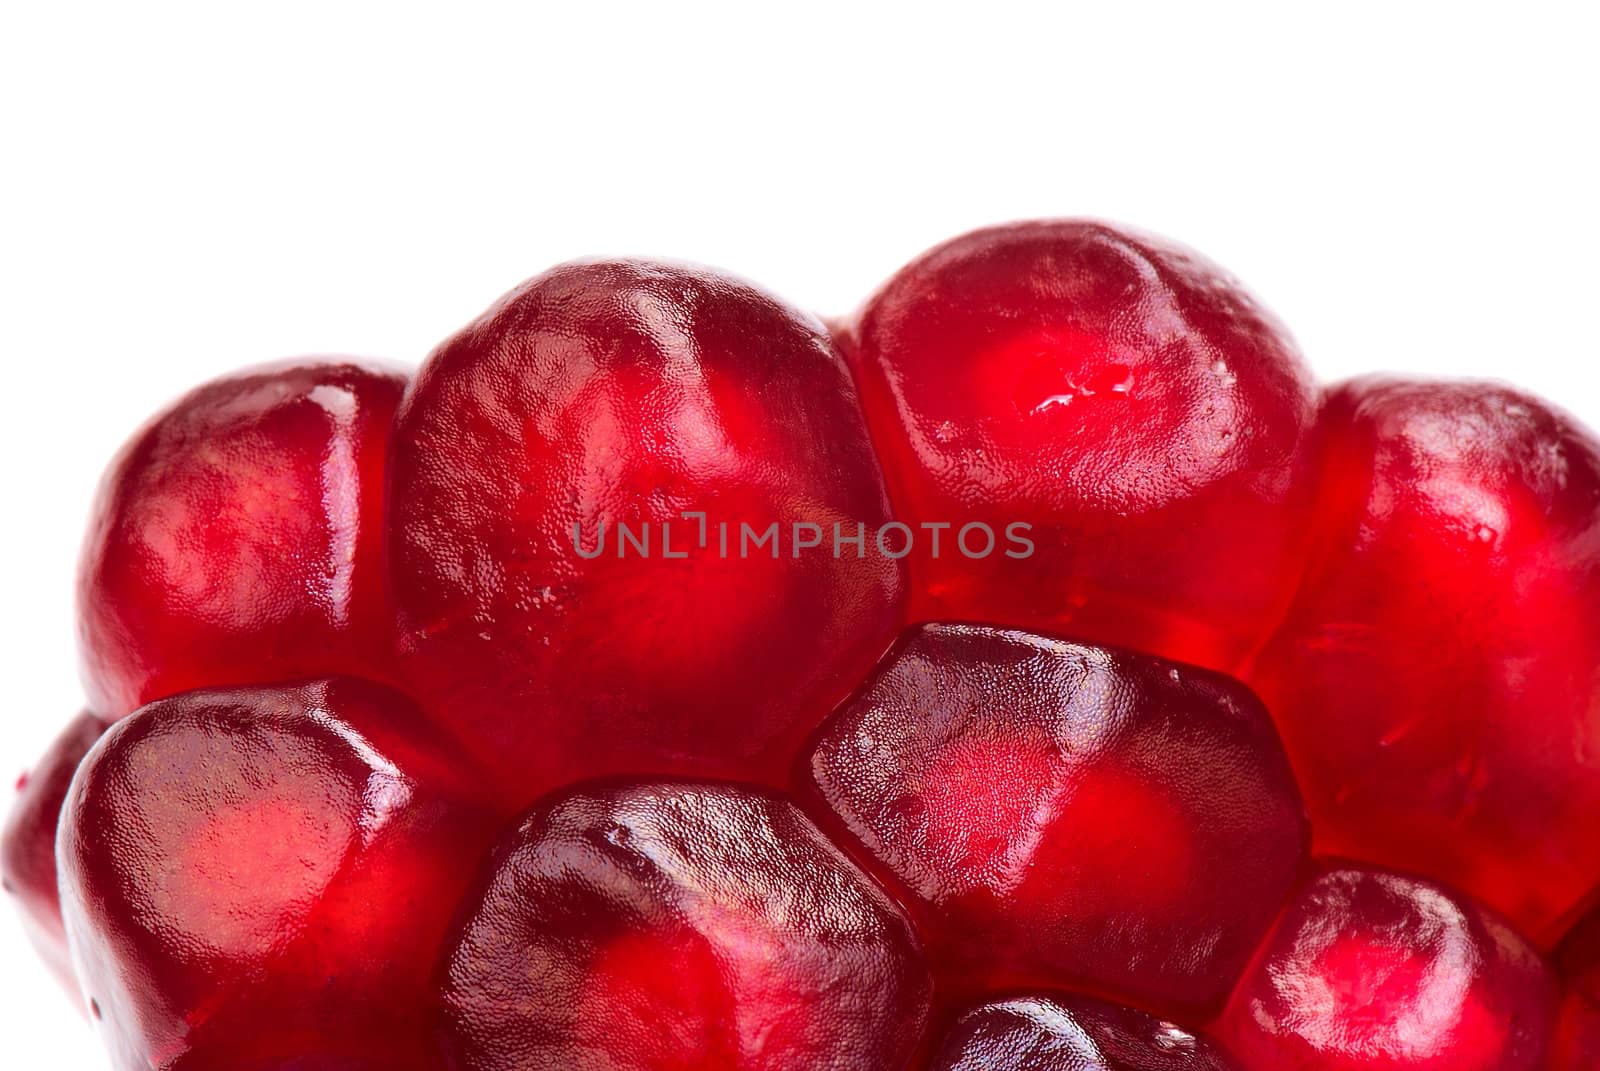 Pomegranate seeds on white background. Extreme close-up.